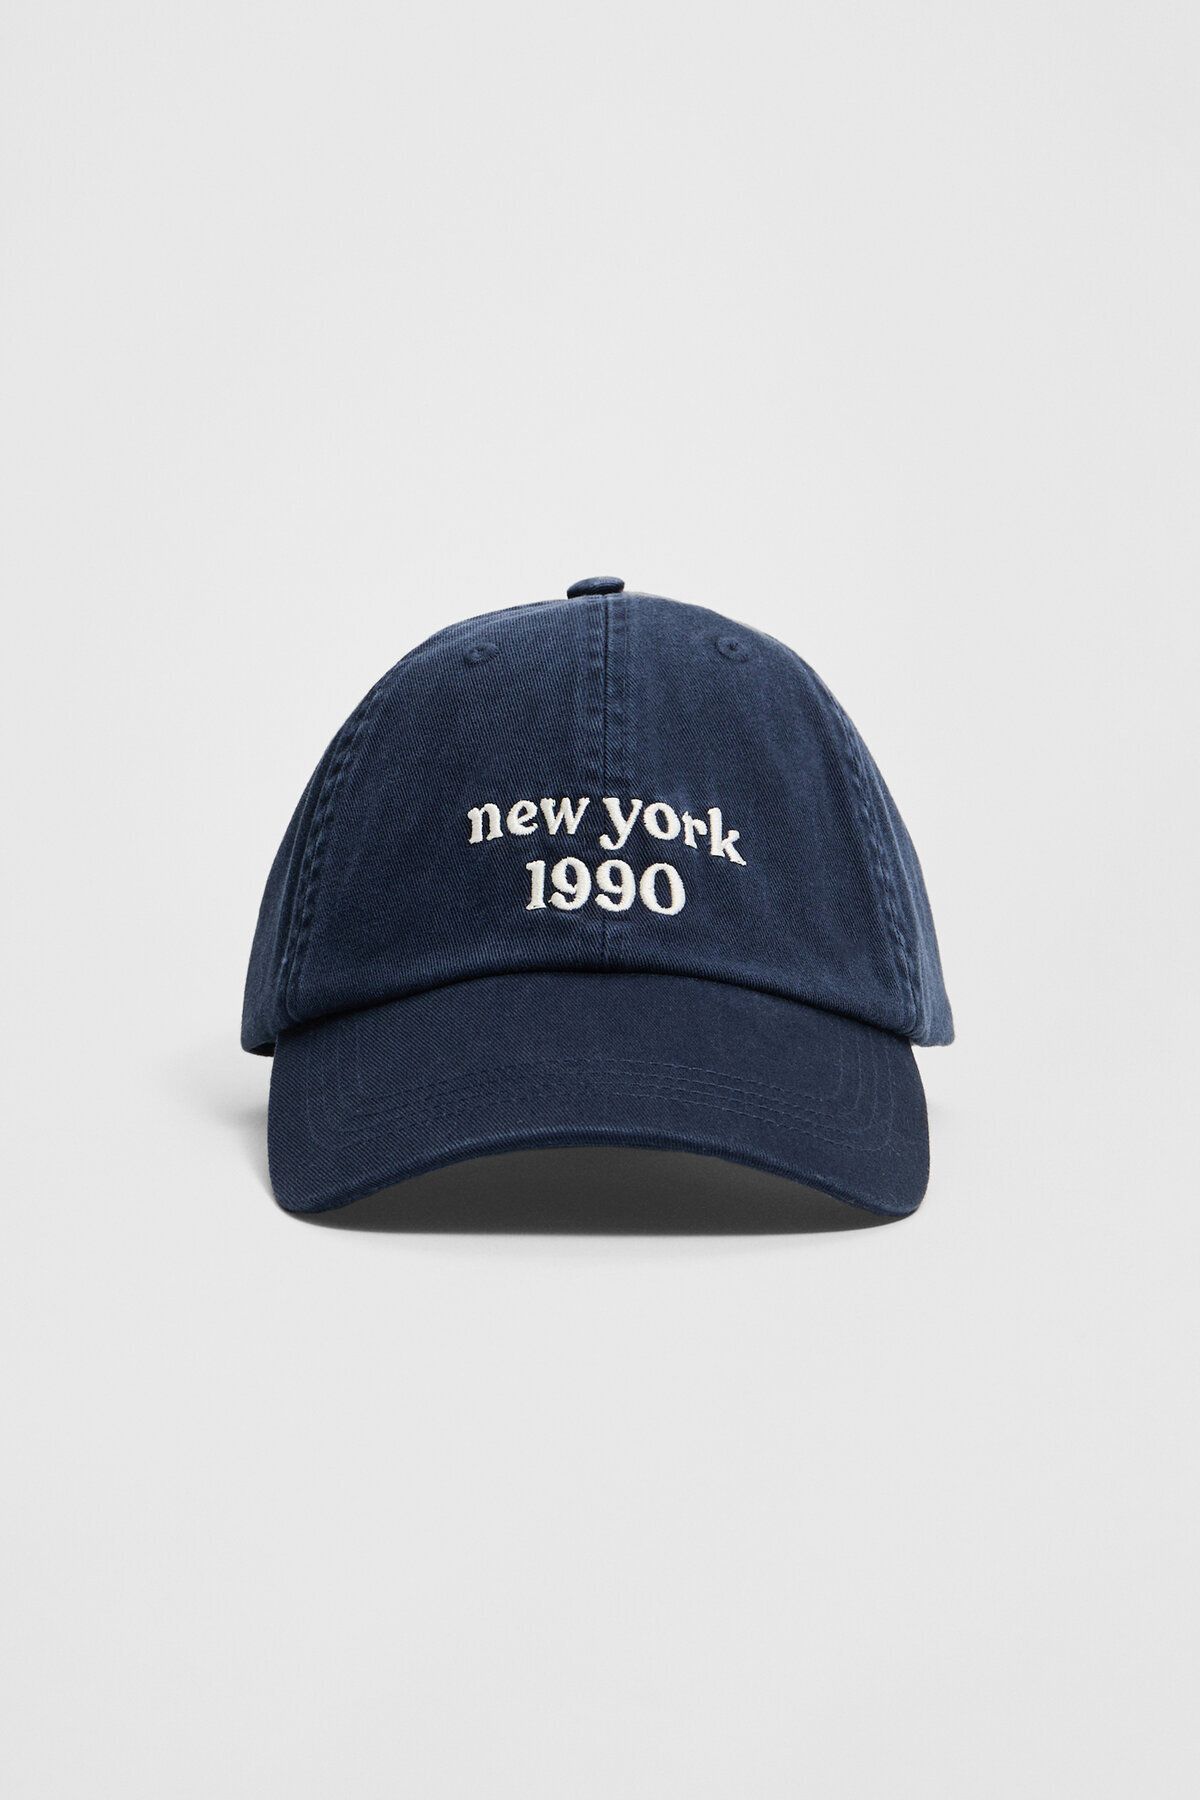 Stradivarius New York 1990 şapka